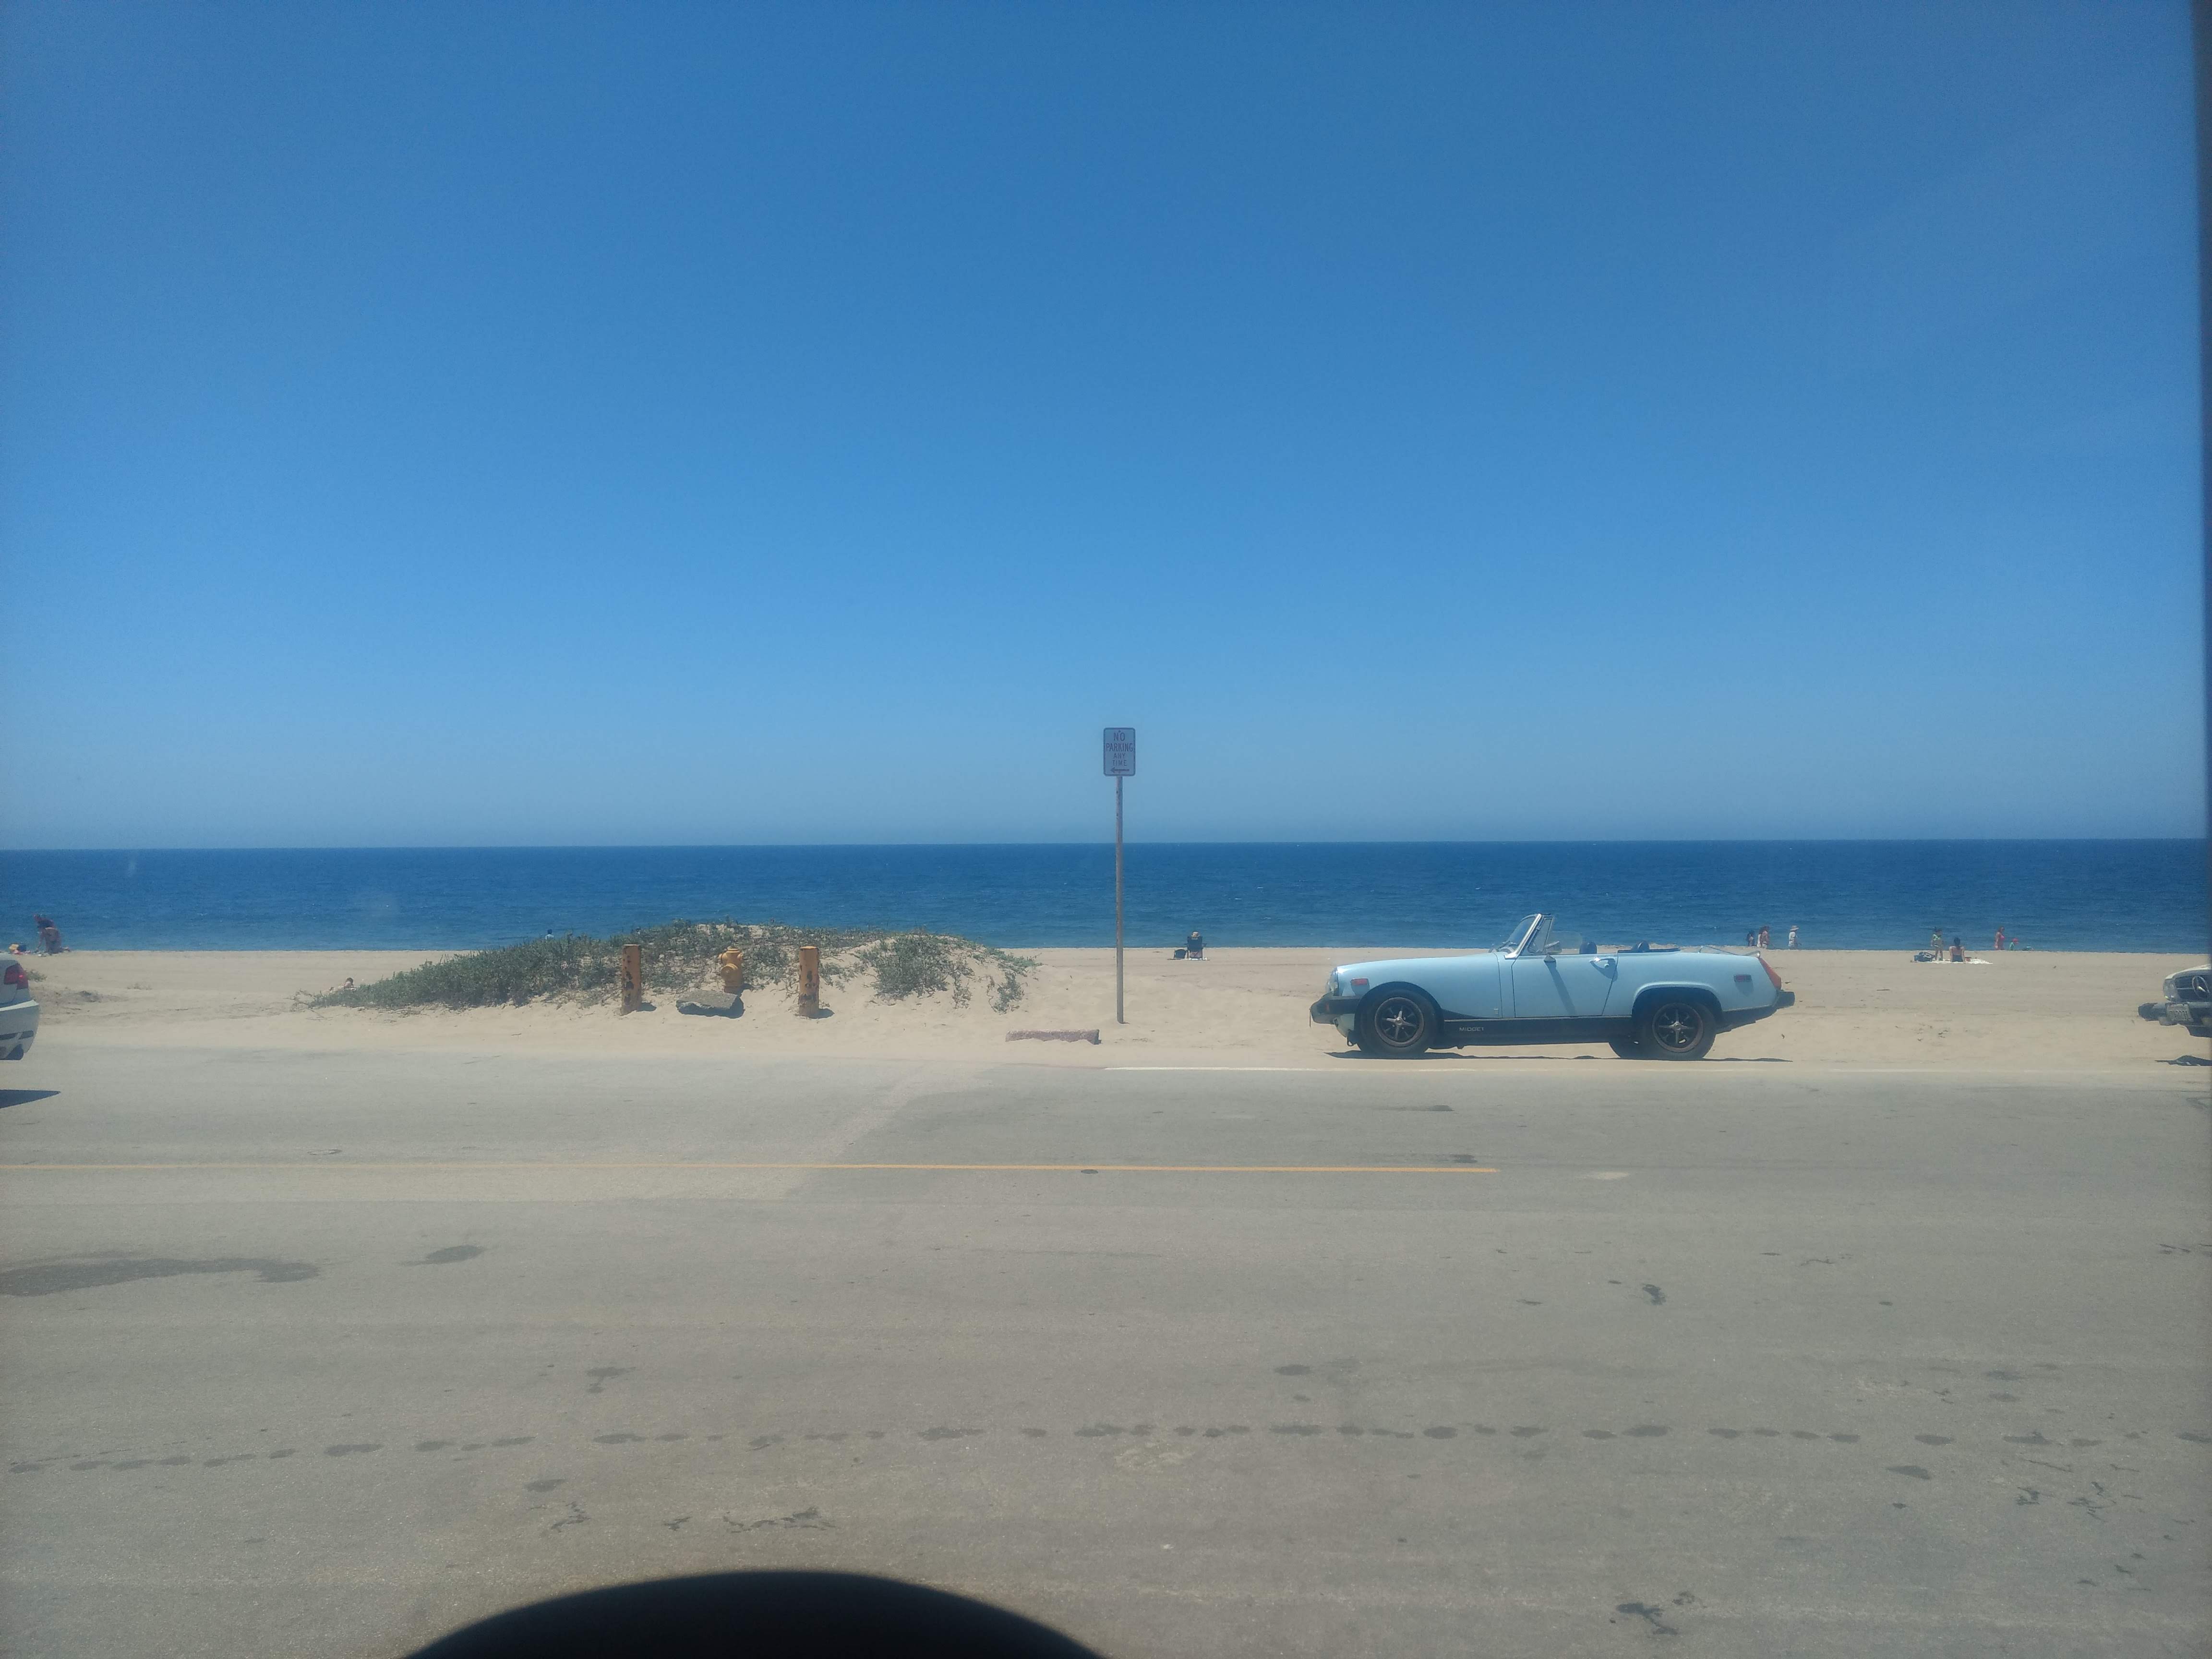 Malibu beach with blue convertible